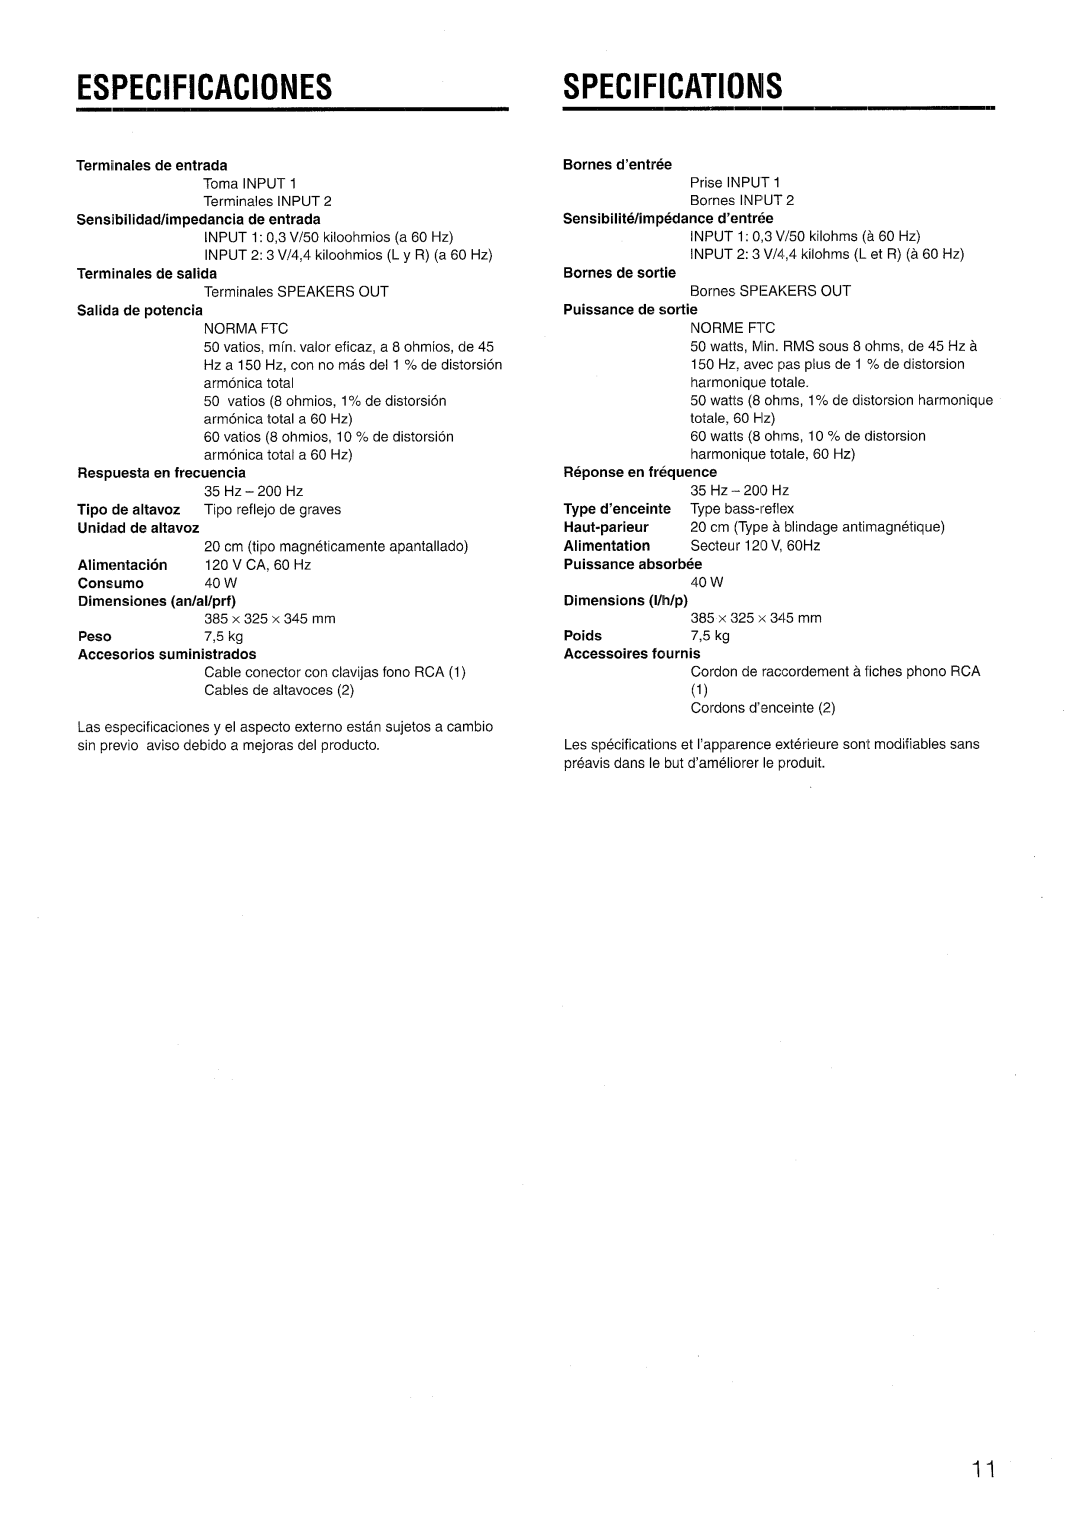 Aiwa TS-W45 manual Especificaciones, Specificationis 